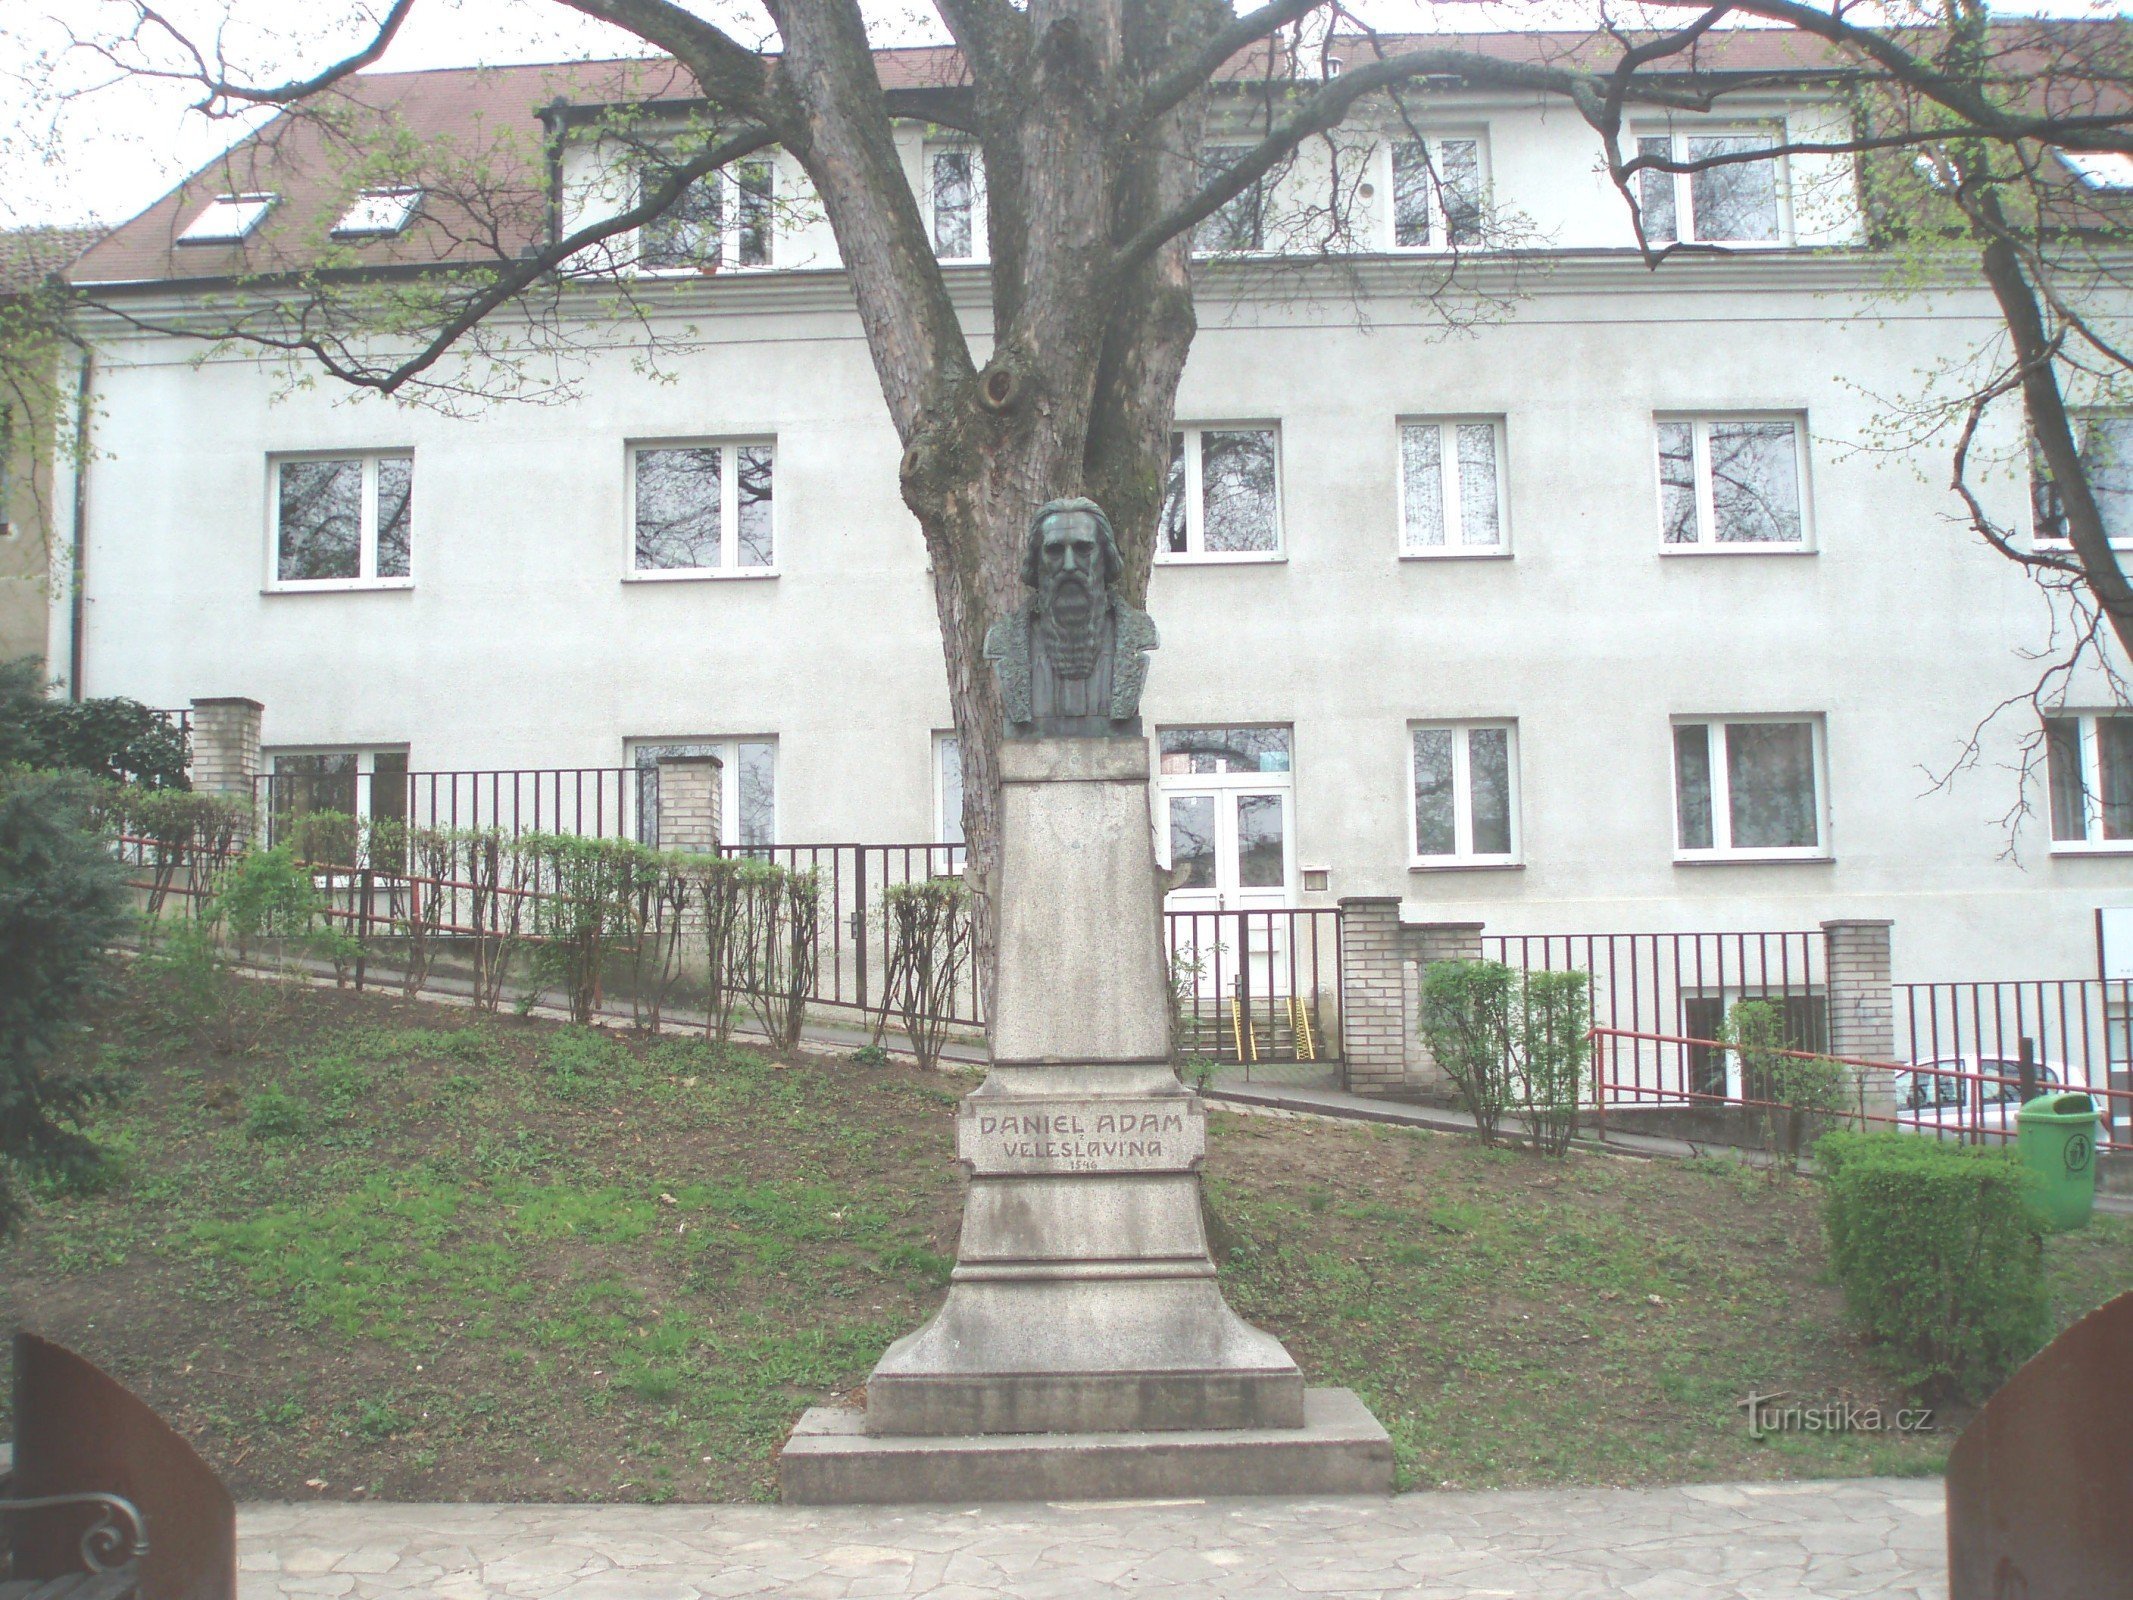 Monumento a Daniel Adam de Veleslavín